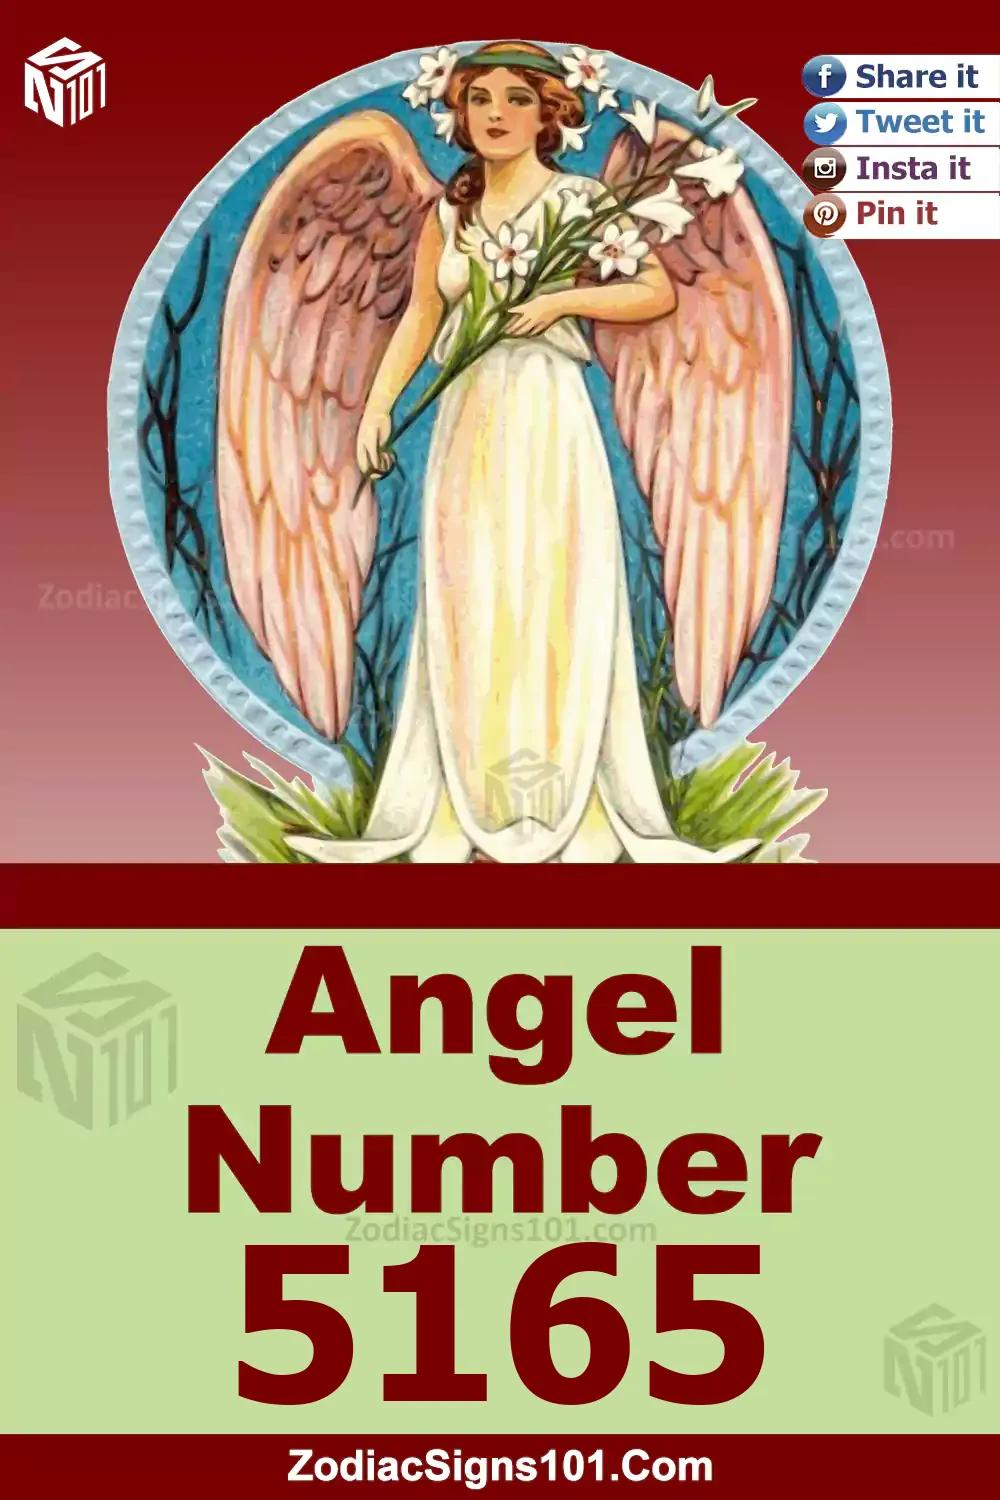 5165-Angel-Number-Meaning.jpg